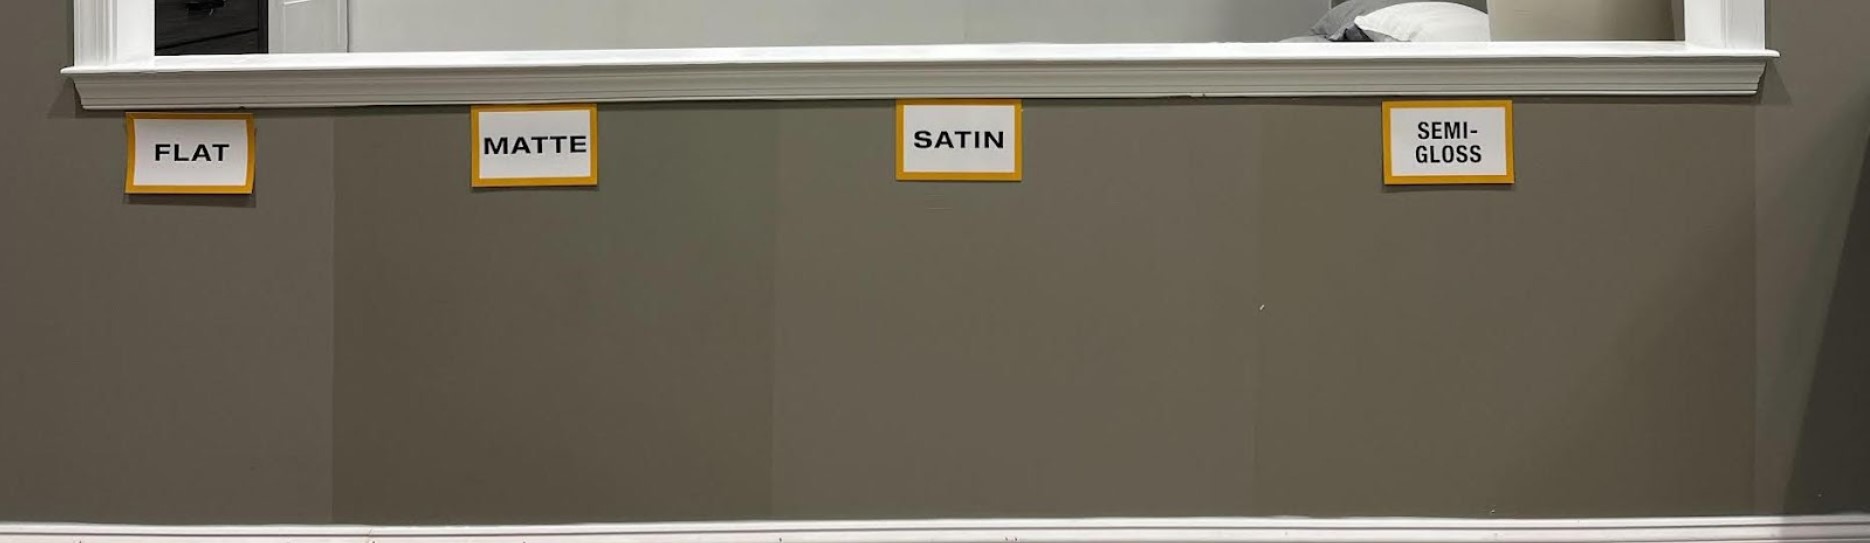 Satin vs Semi Gloss - Satin and Semi-Gloss Paint Differences